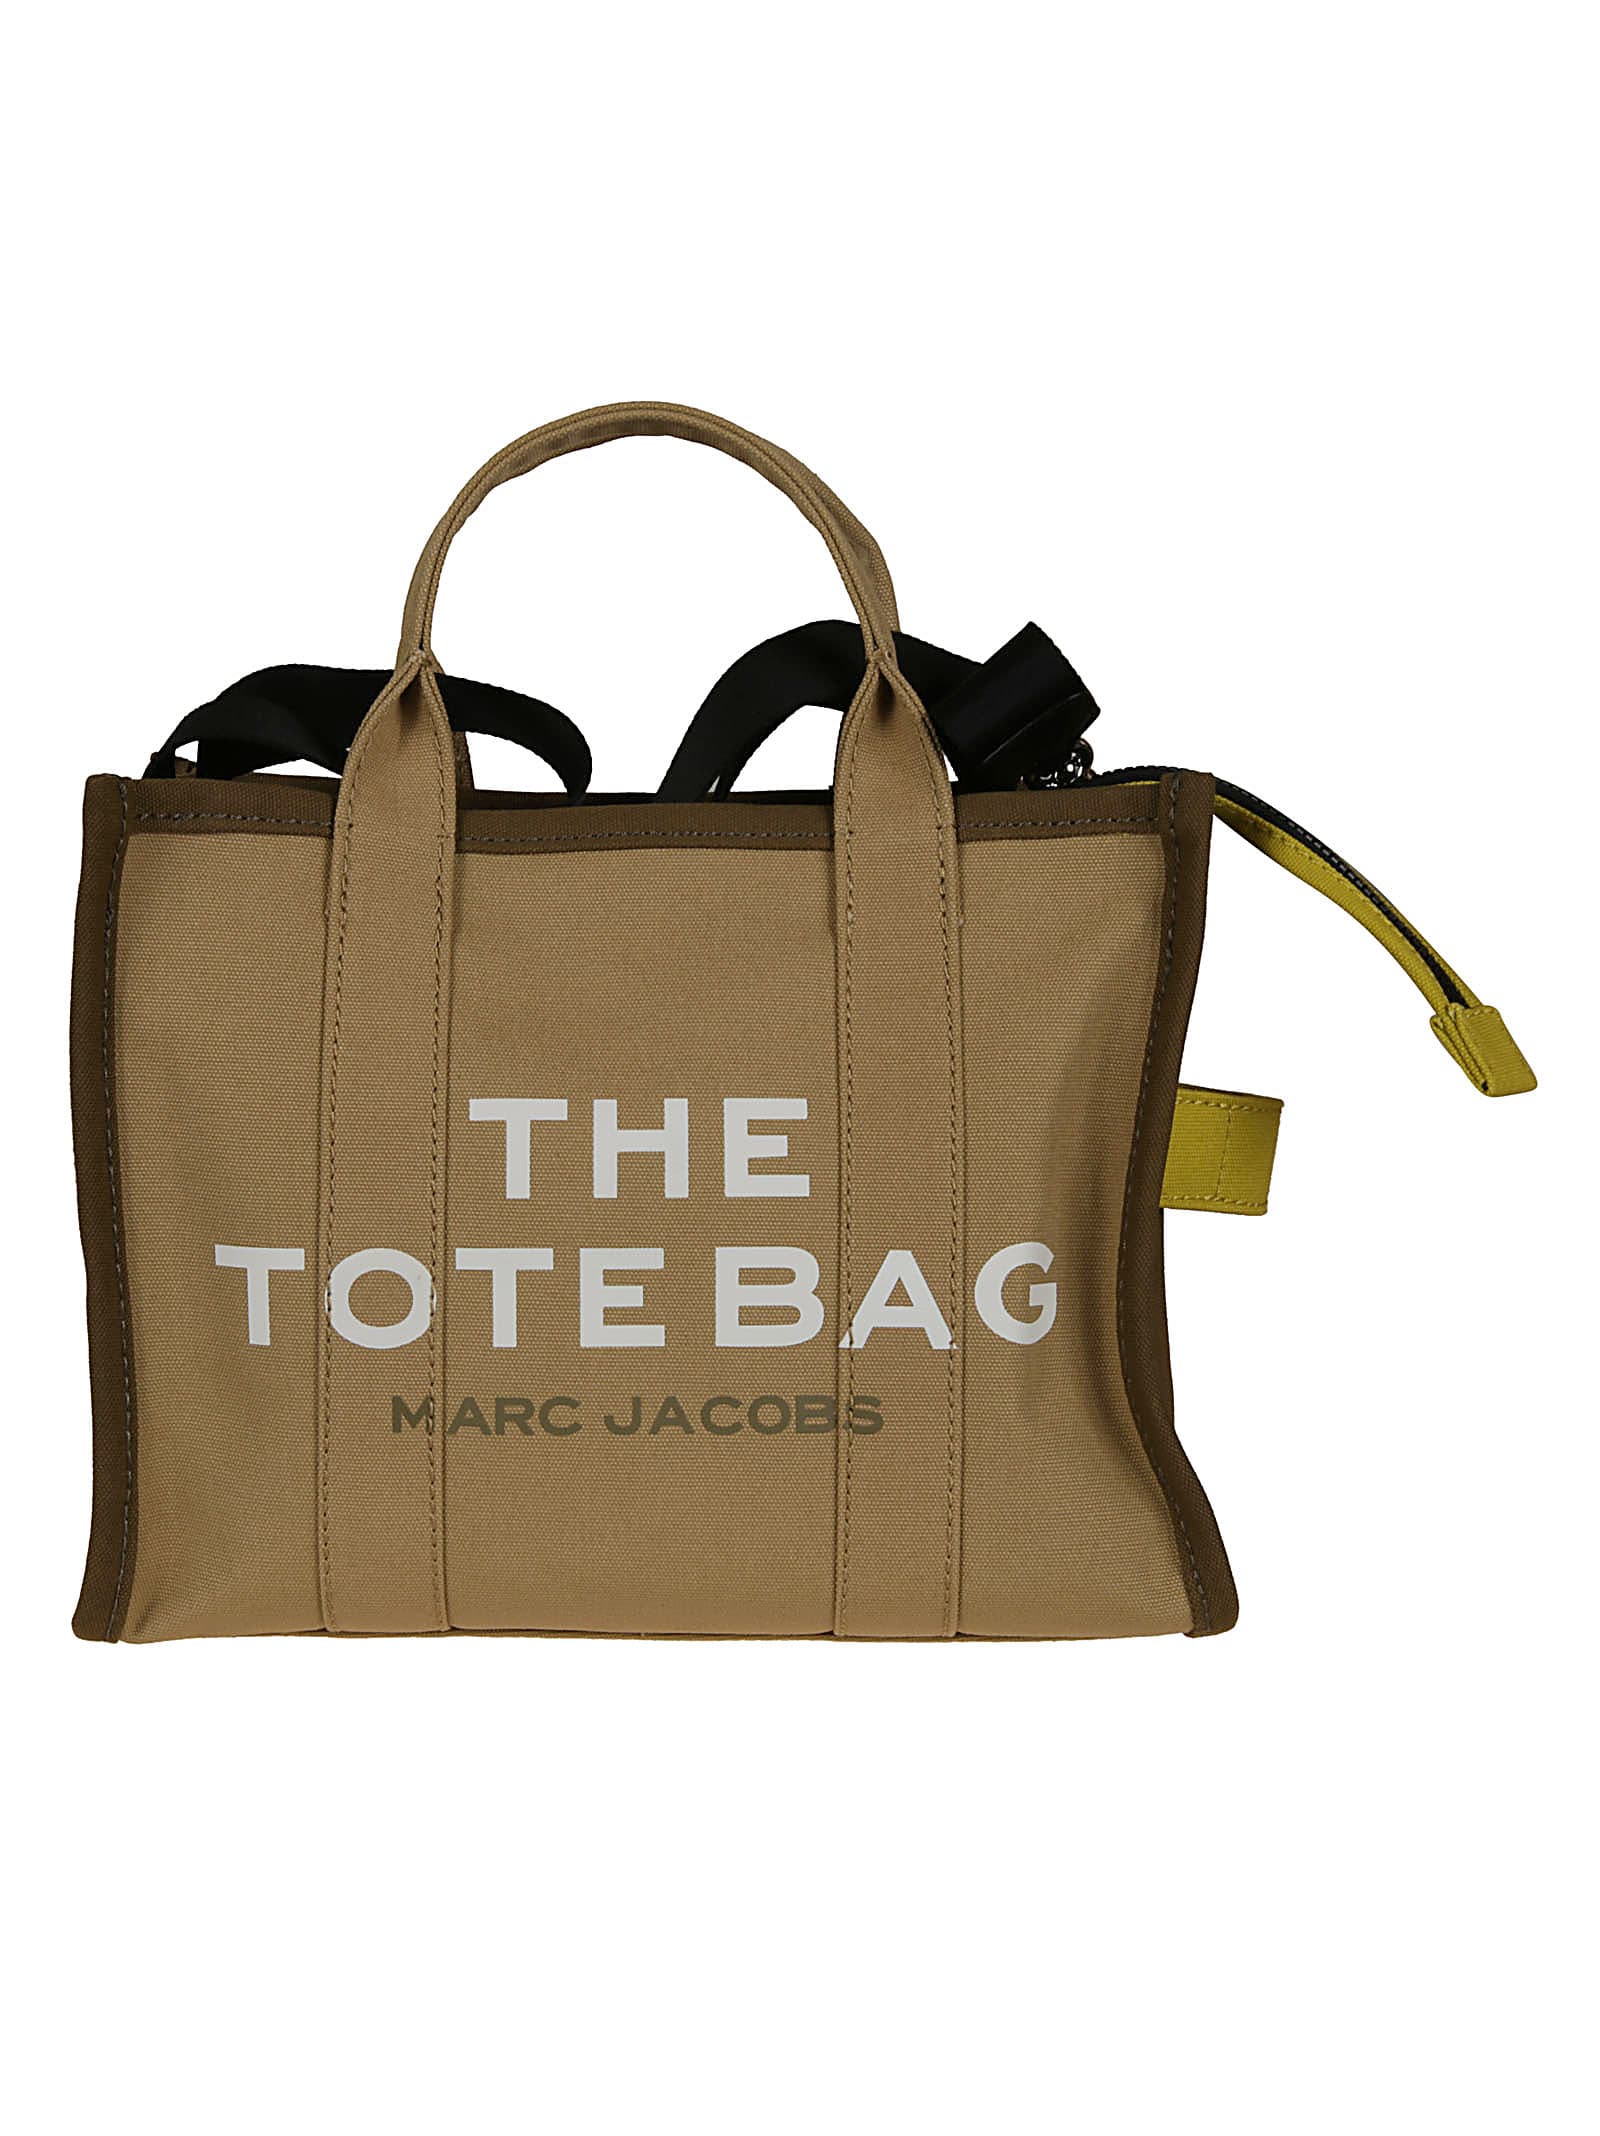 Marc Jacobs The Tote Bag Print Tote